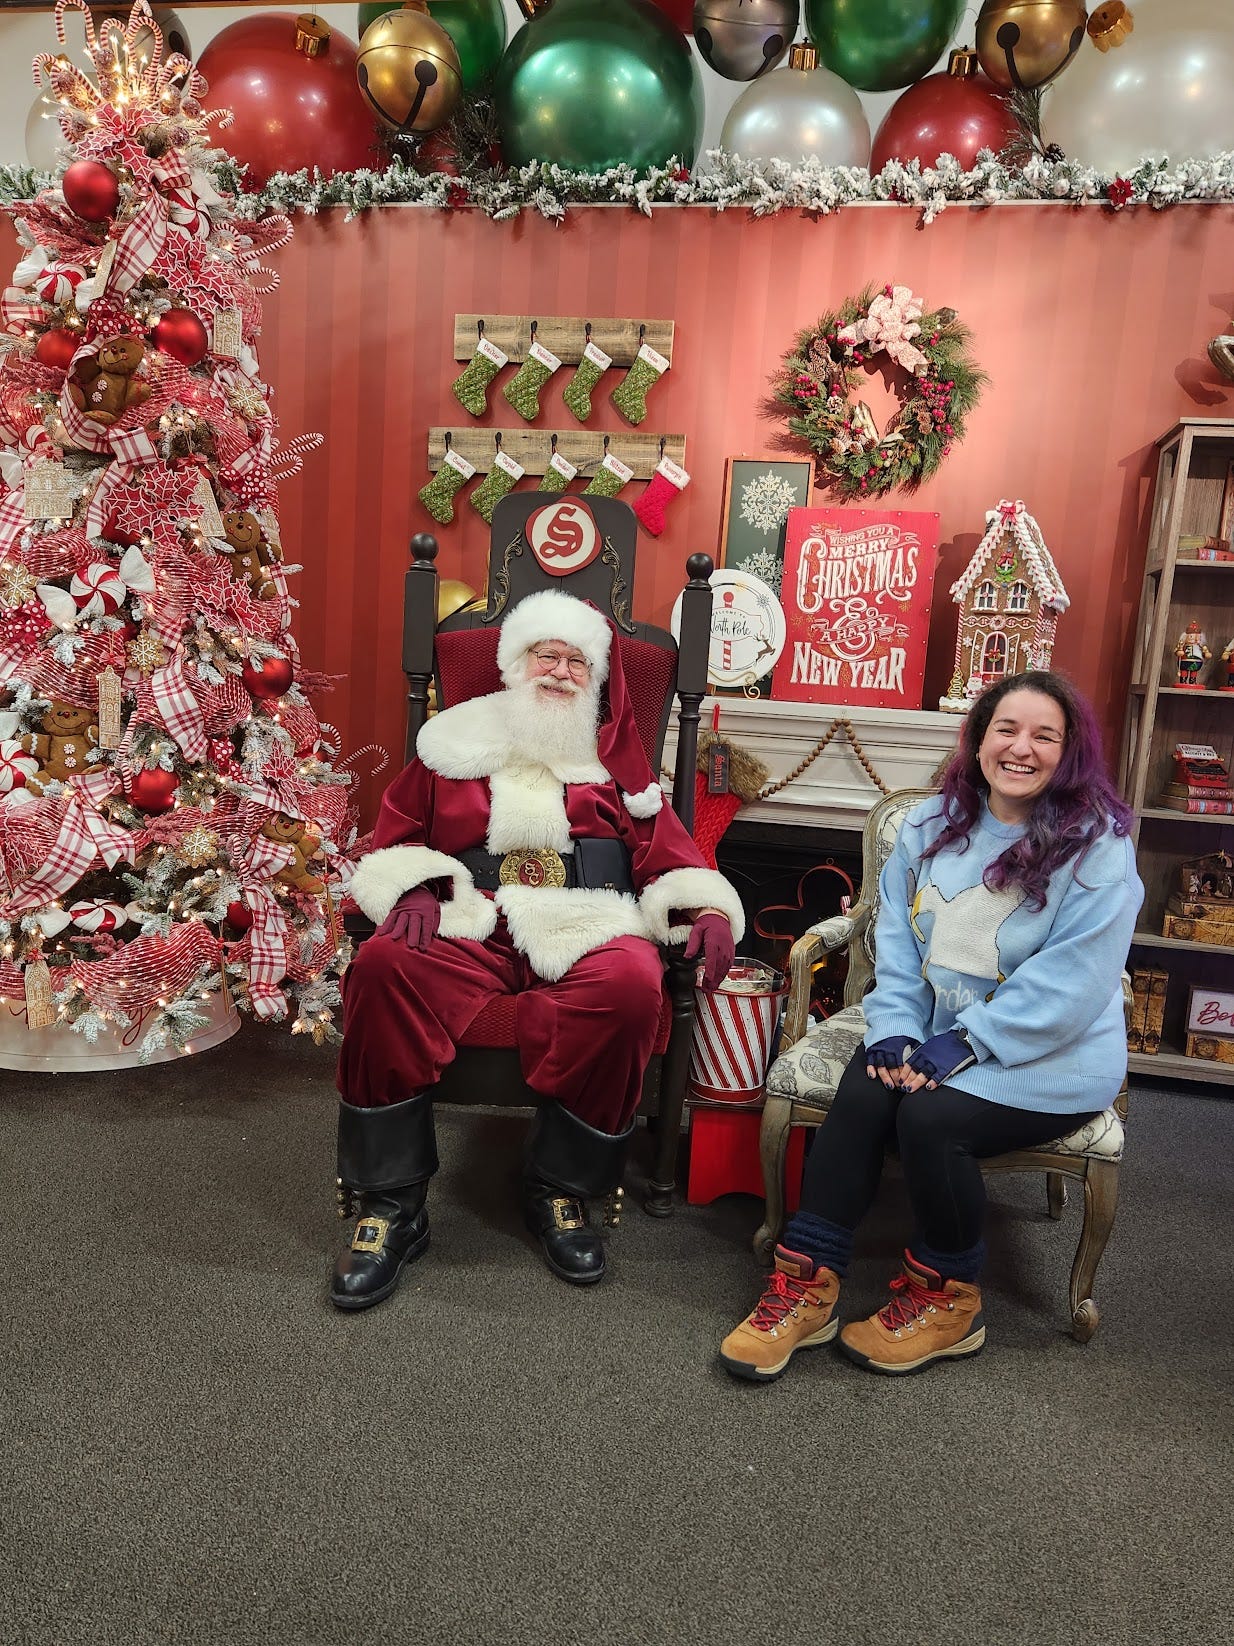 Me with Santa at the North Pole